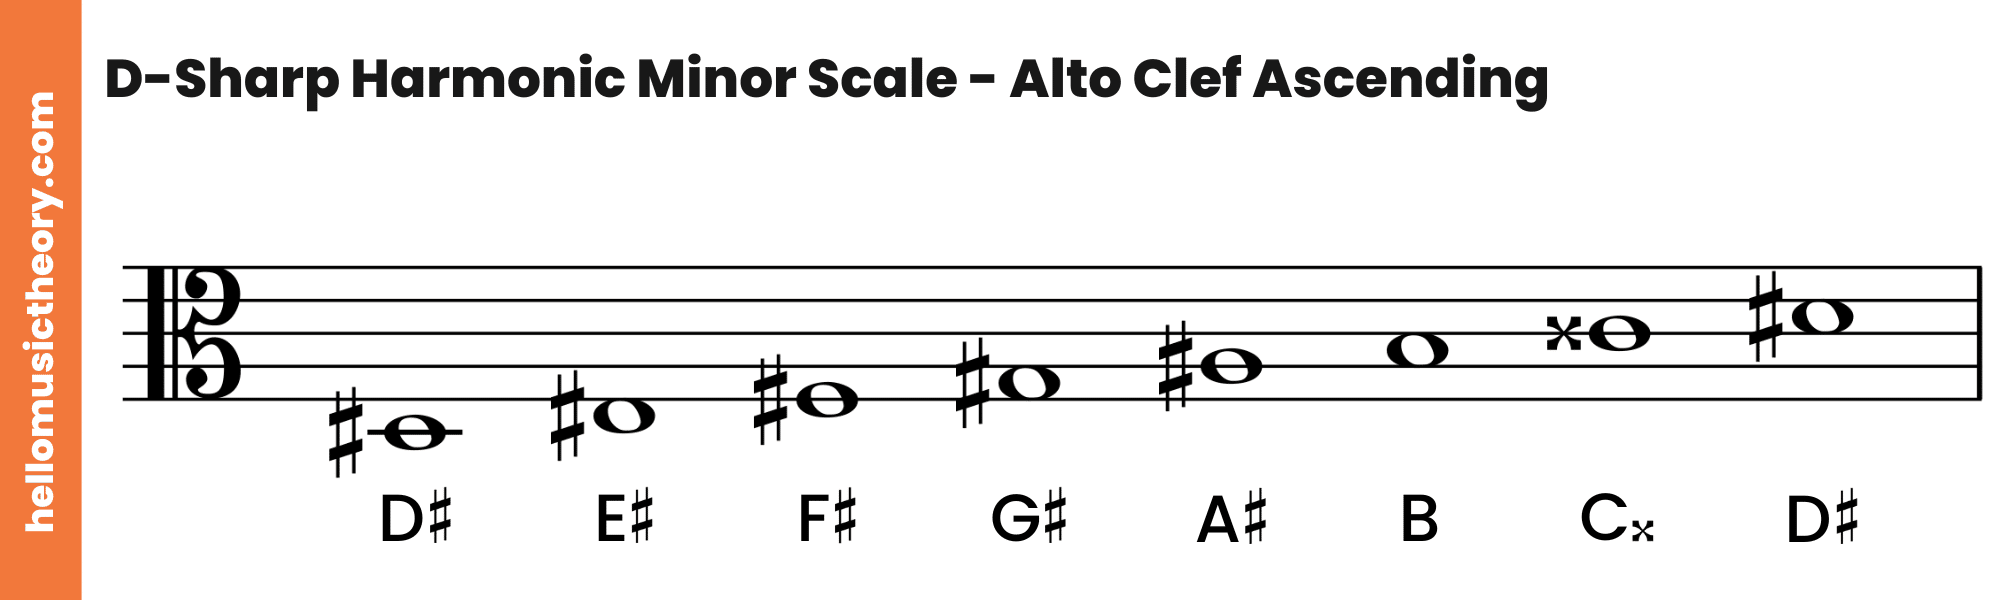 D-Sharp Harmonic Minor Scale Alto Clef Ascending